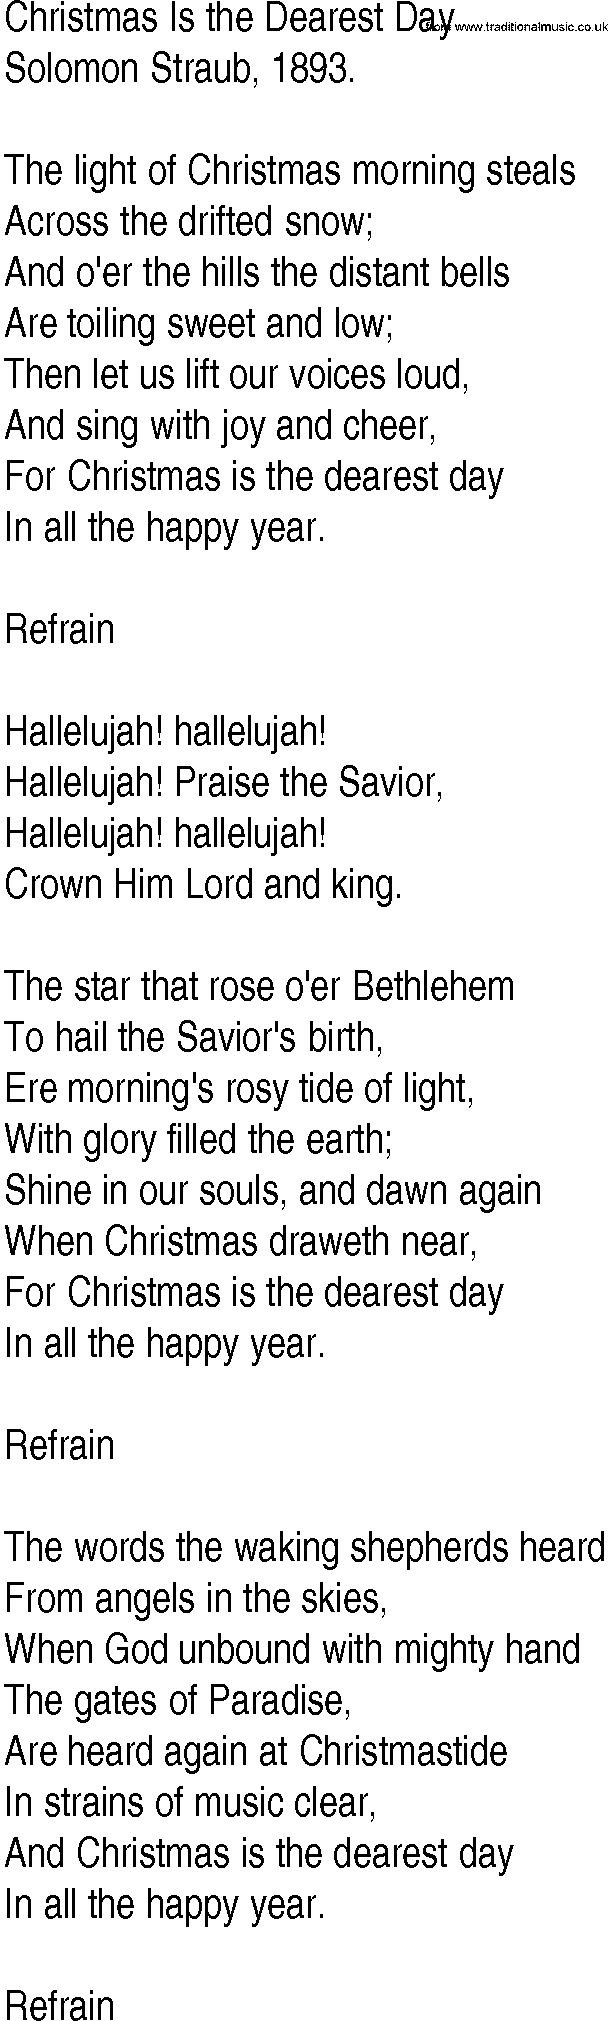 Hymn and Gospel Song: Christmas Is the Dearest Day by Solomon Straub lyrics